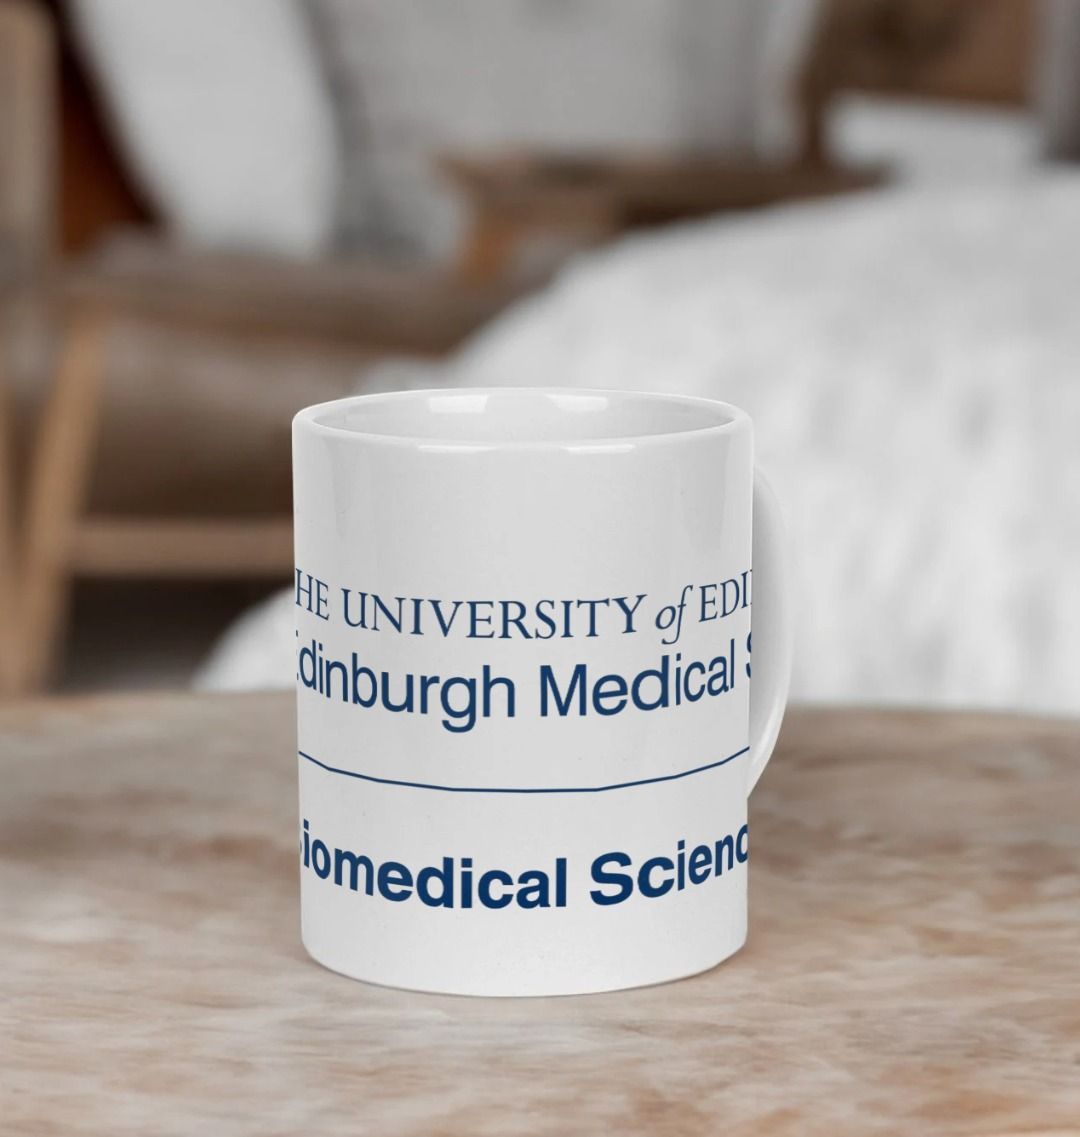 White Edinburgh Medical School - Biomedical Sciences Mug with multi-colour printed University crest and logo